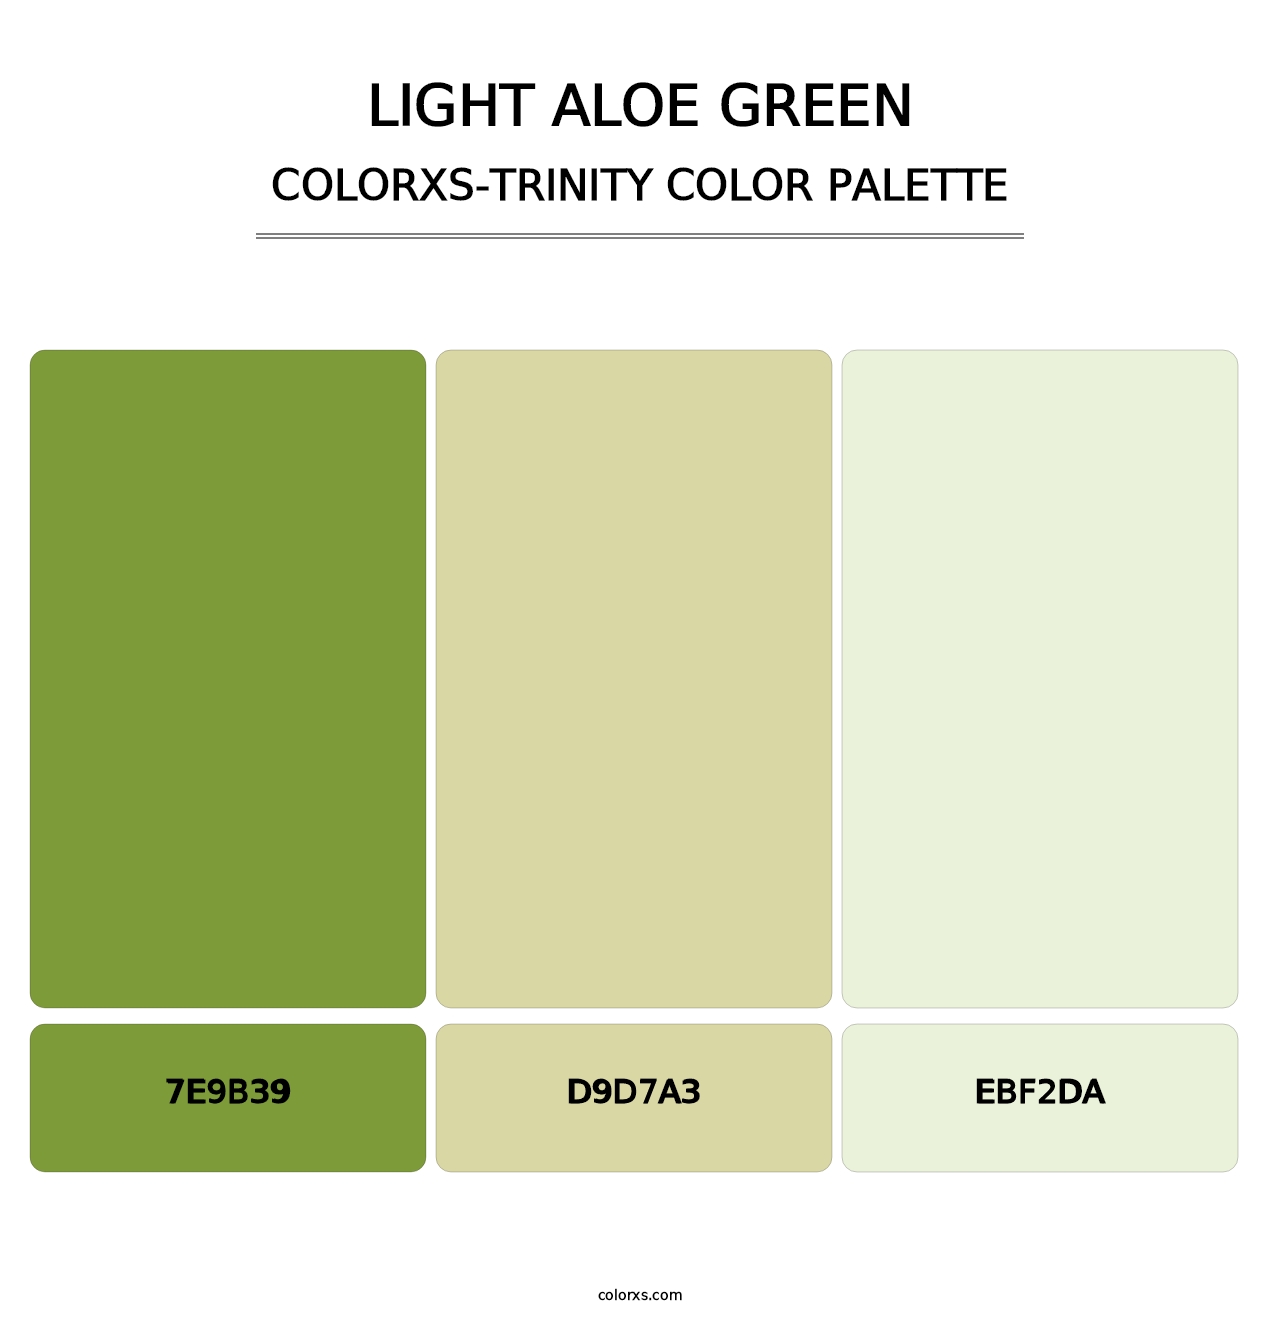 Light Aloe Green - Colorxs Trinity Palette